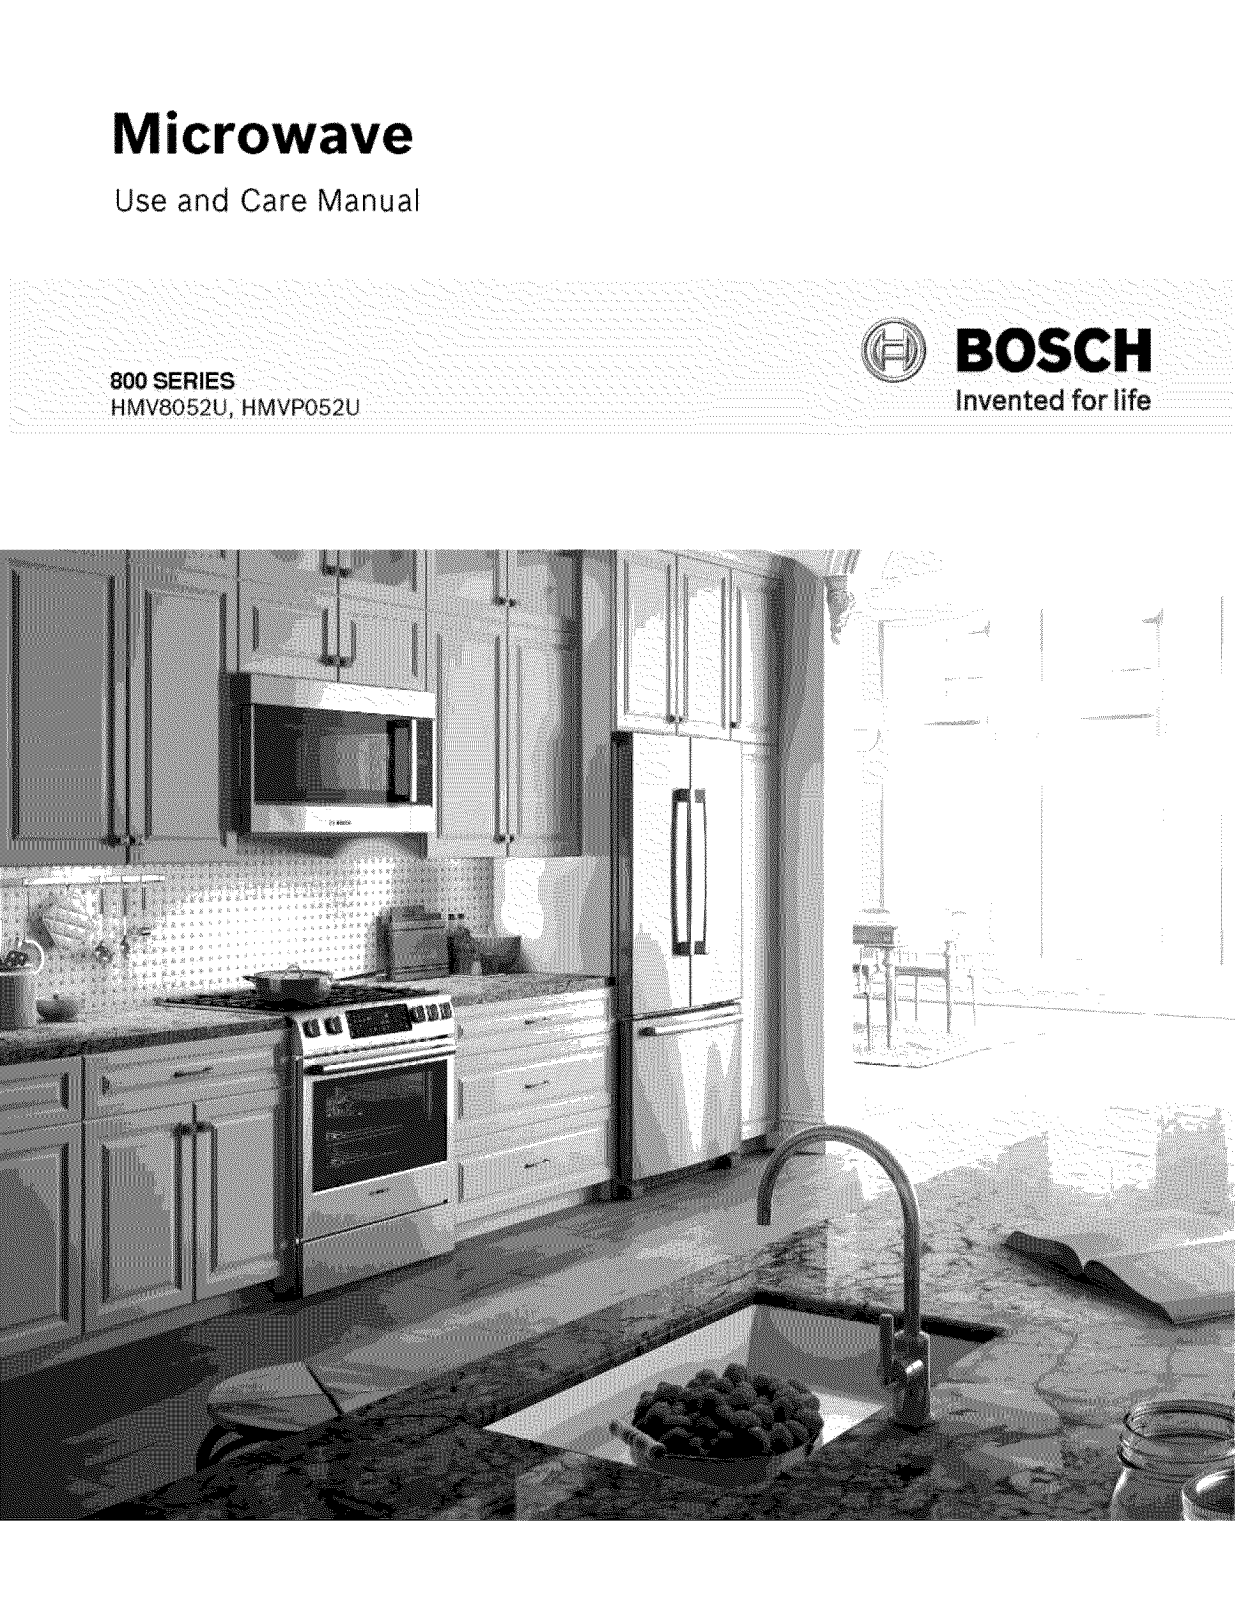 Bosch HMVP052U/01, HMVP052U/02, HMV8052U/02, HMV8052U/01 Owner’s Manual